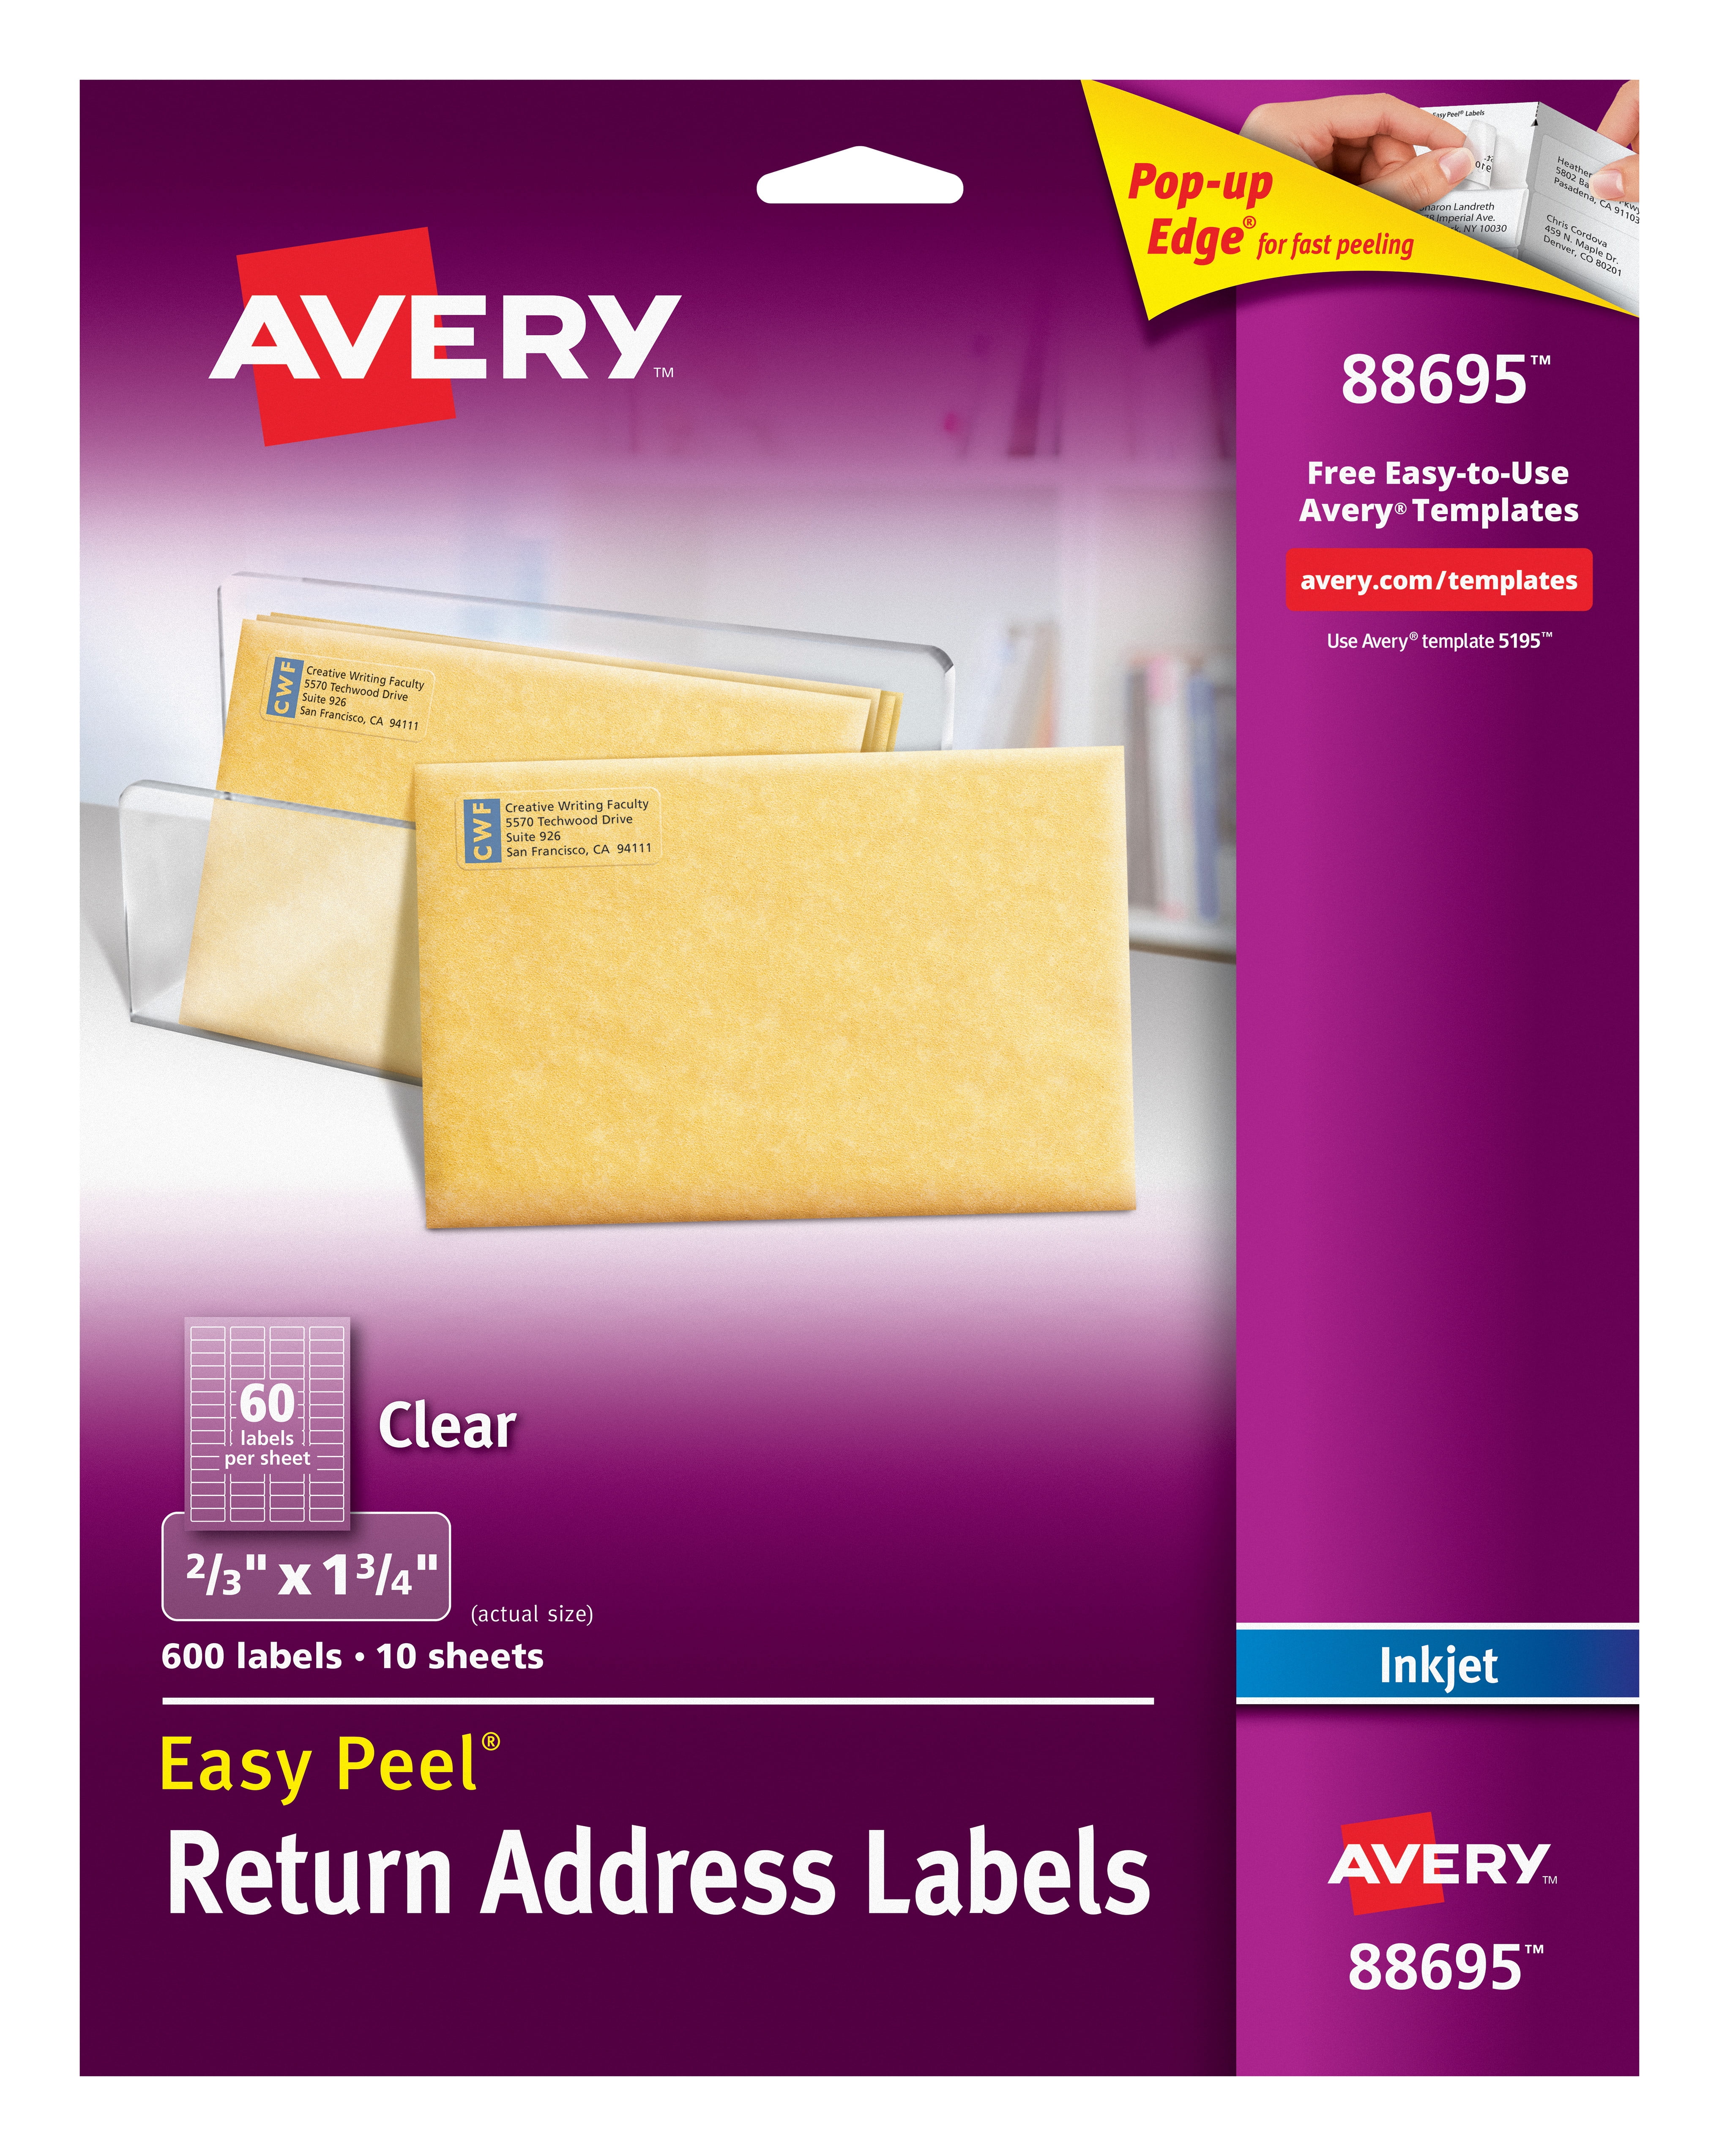 avery-return-address-labels-2-3-x-1-3-4-easy-peel-clear-600